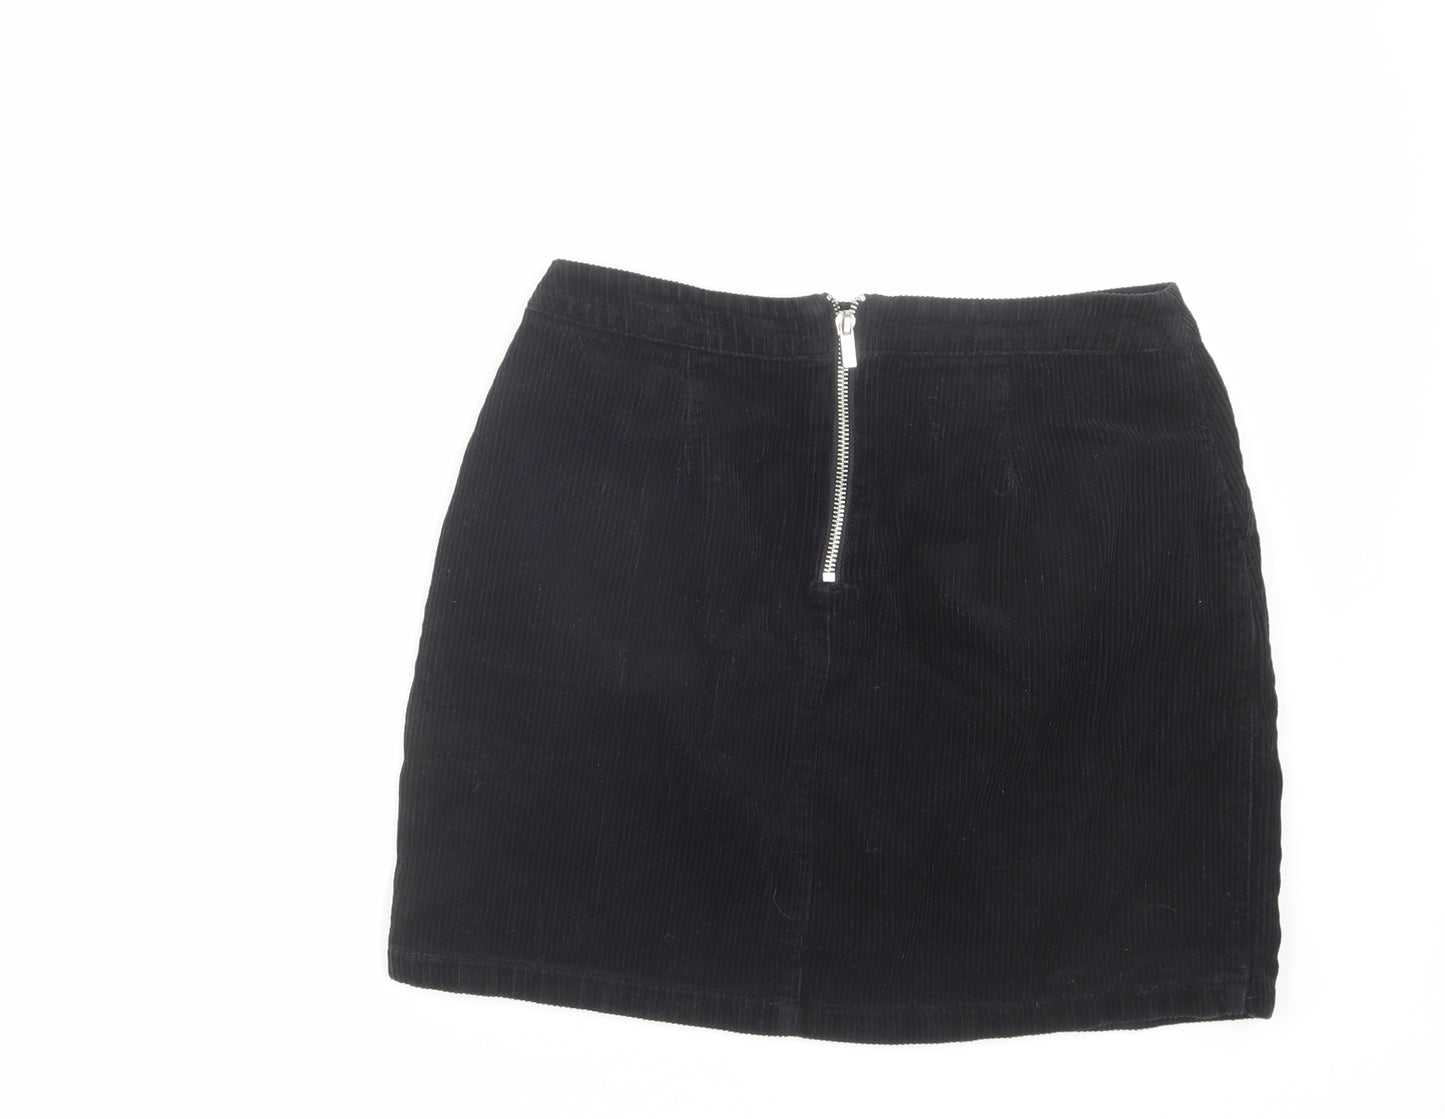 New Look Womens Black Cotton Mini Skirt Size 8 Zip